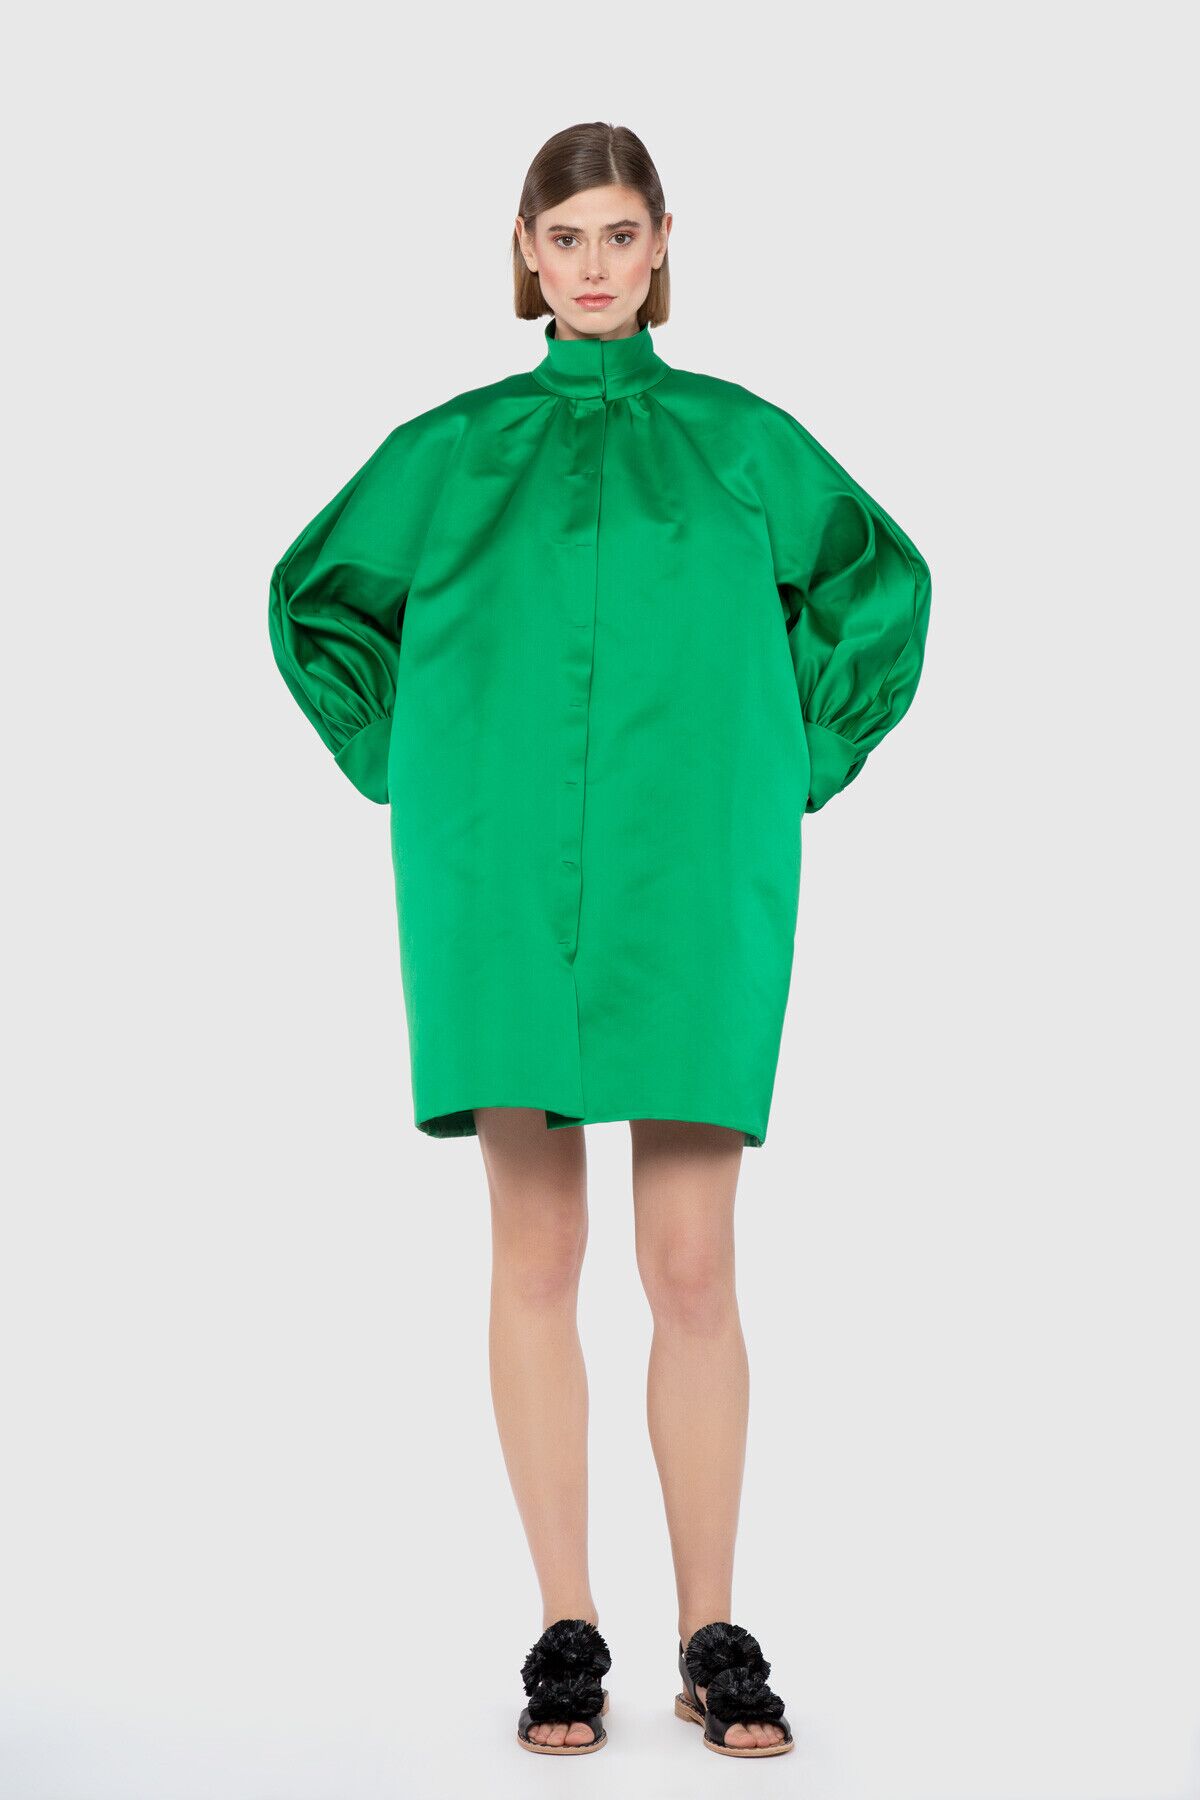 GIZIAGATE - Voluminous Wide Cut Stand-up Collar Mini Green Dress